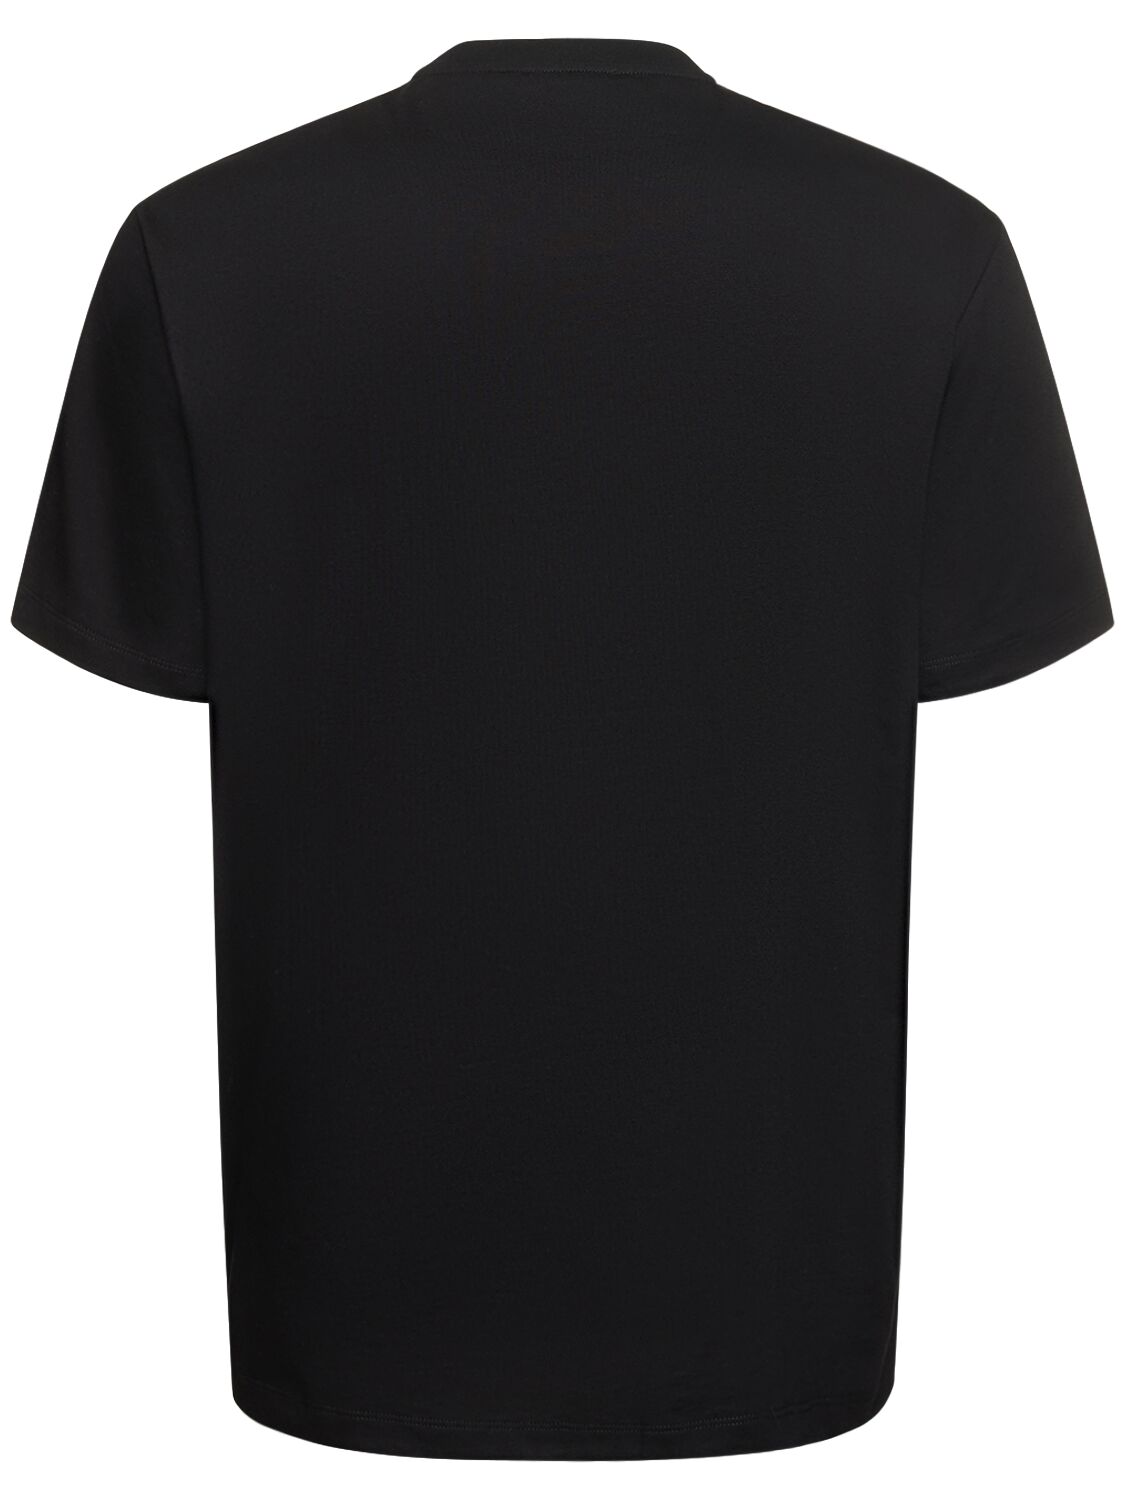 Shop Versace Lights Printed Cotton T-shirt In Black